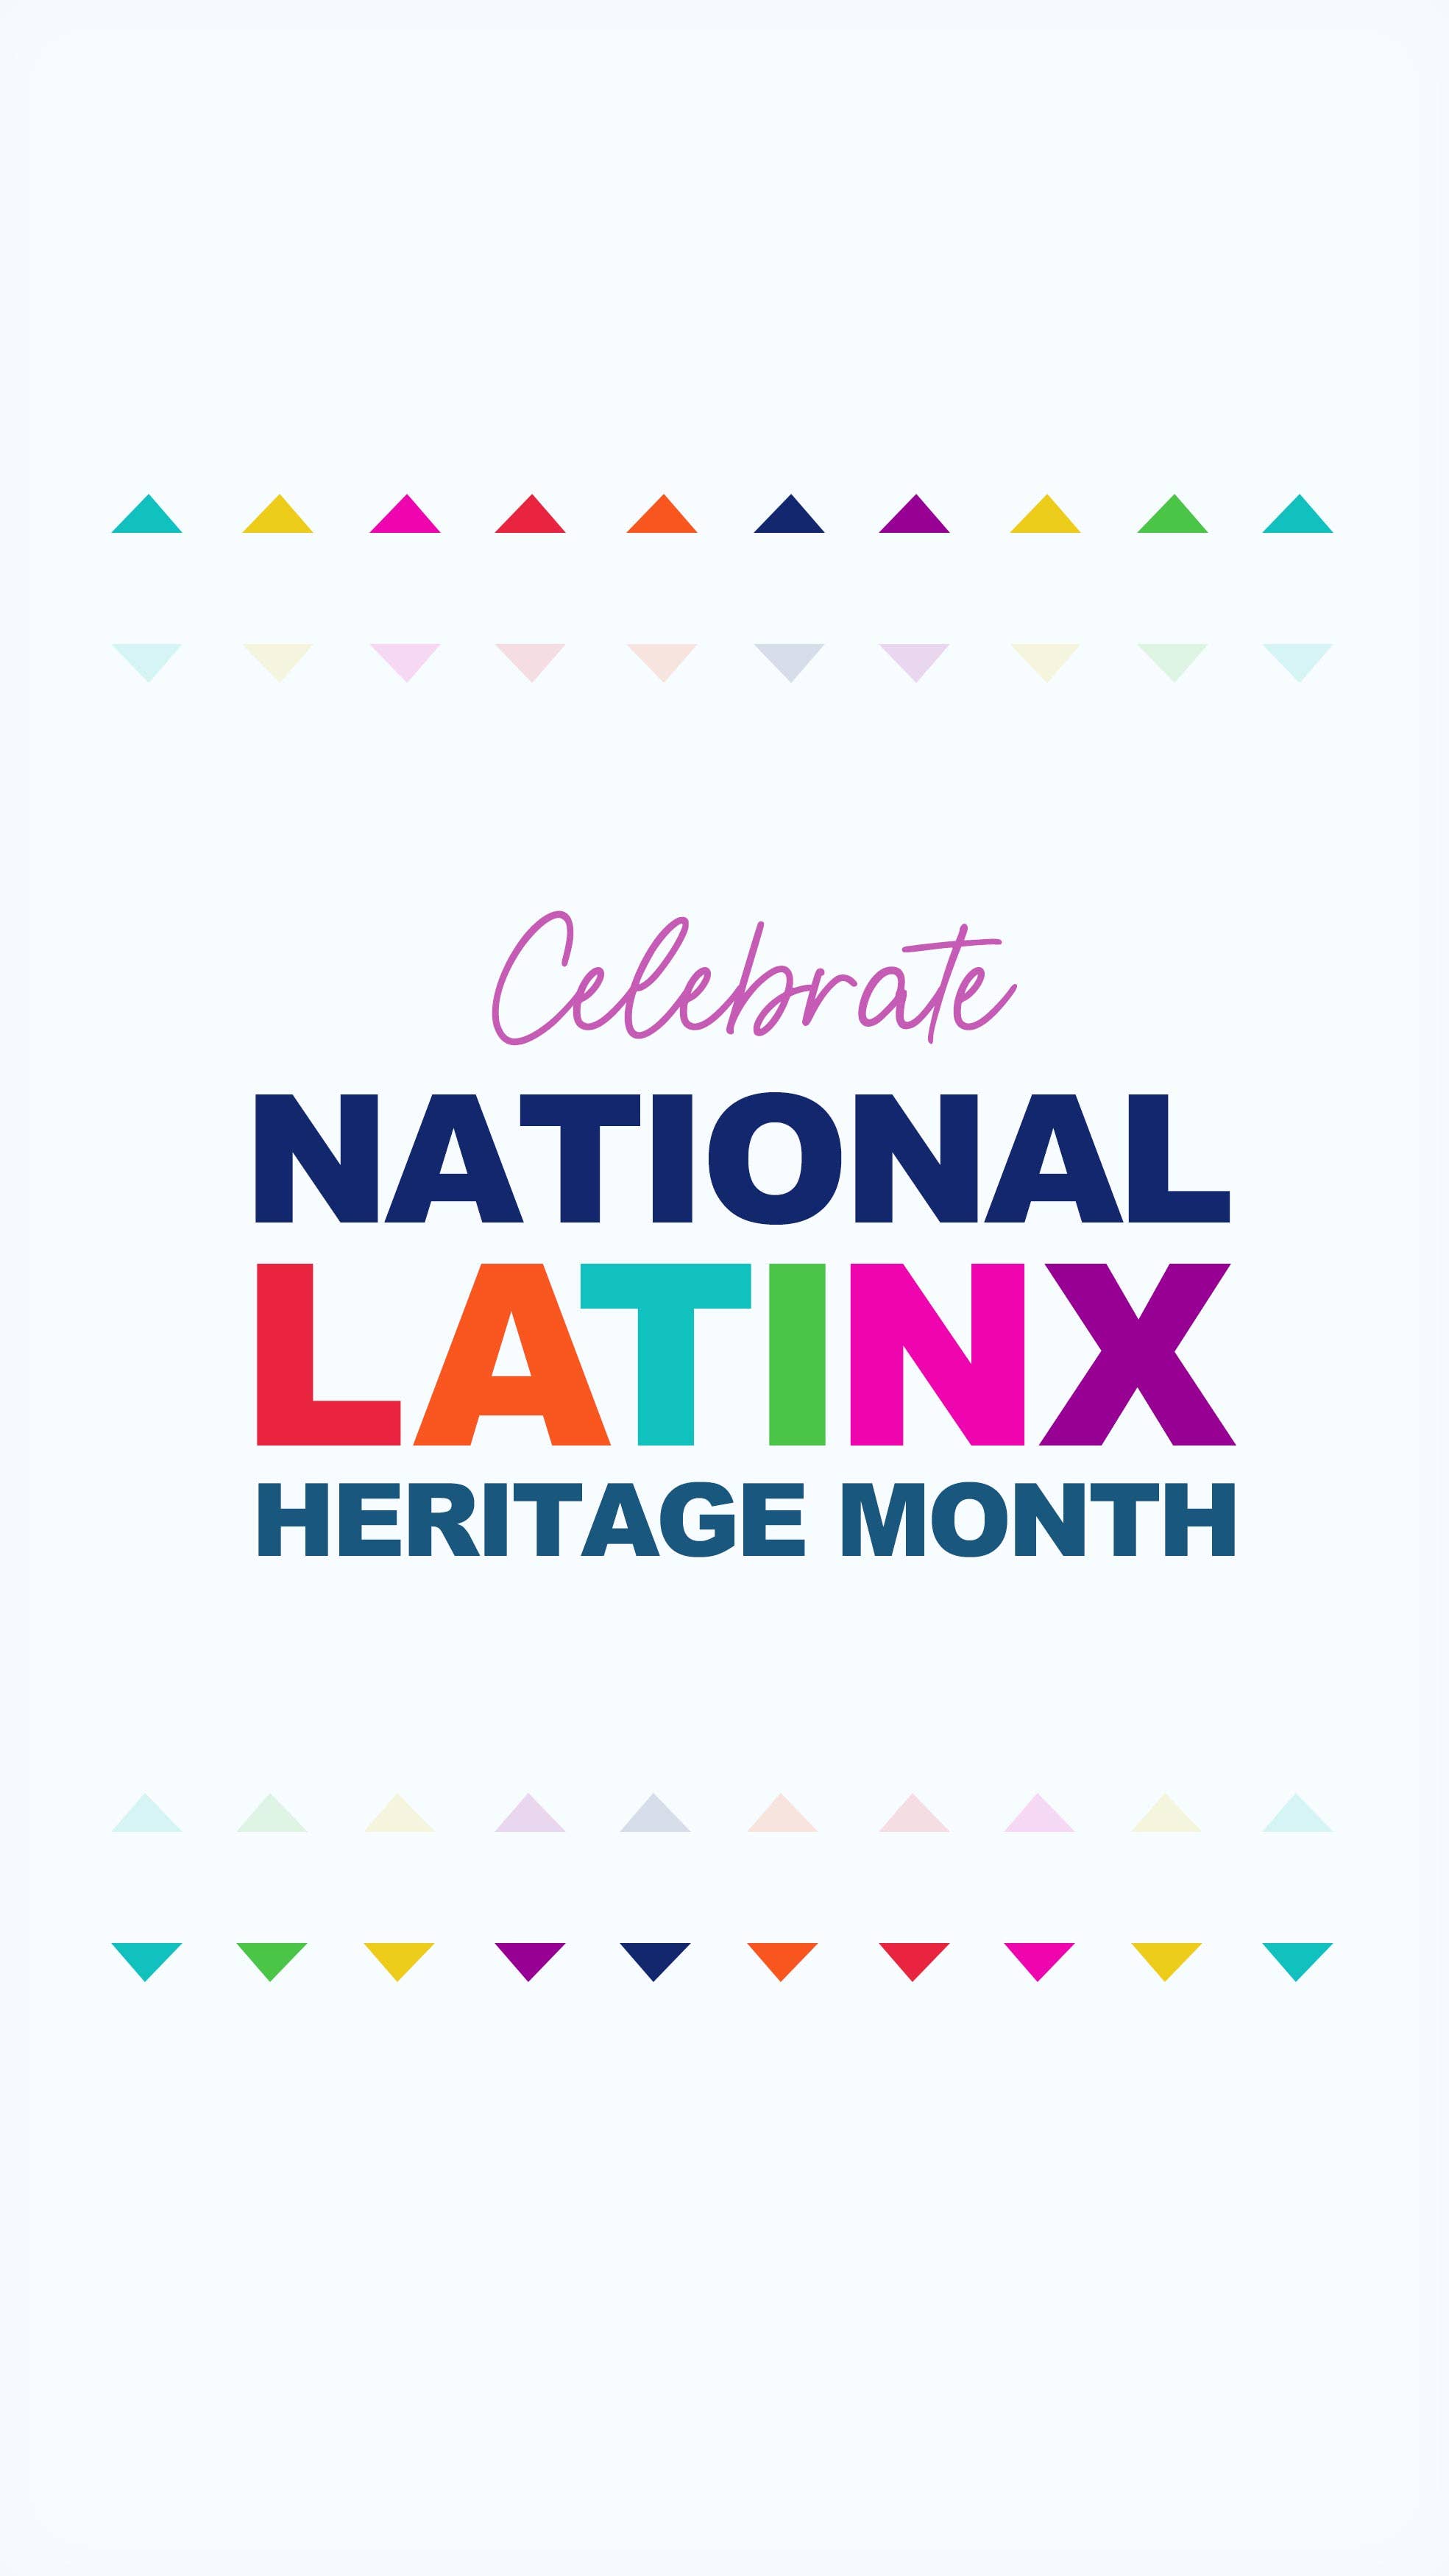 Celebrate National Latinx